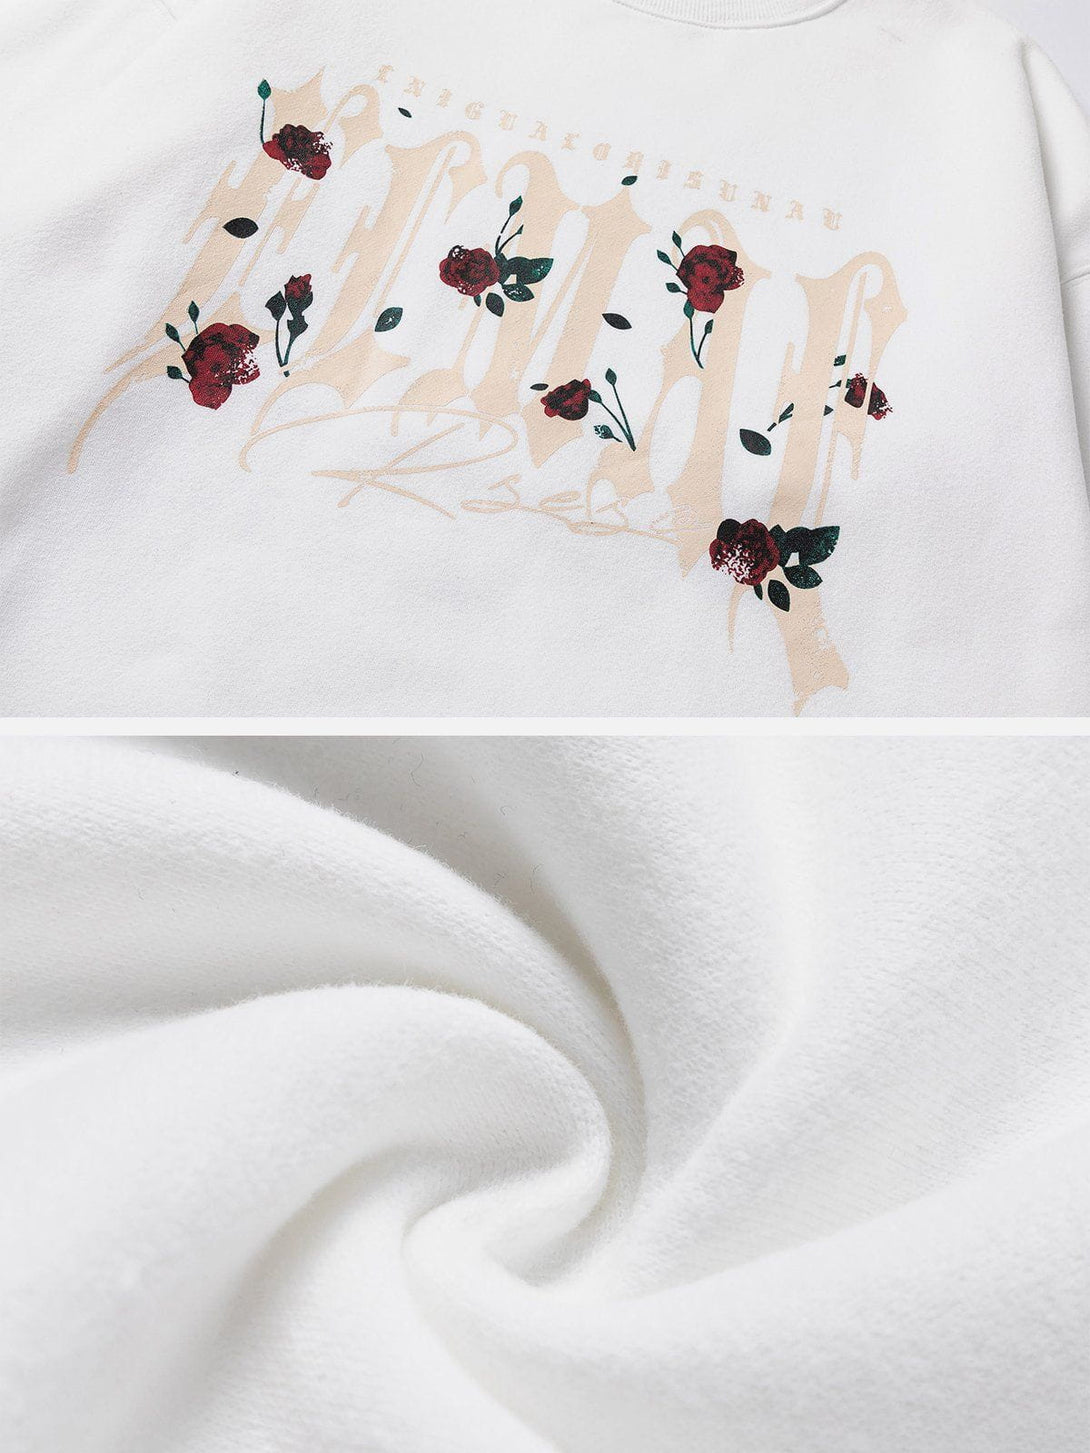 Levefly - Floral Print Sweatshirt - Streetwear Fashion - levefly.com